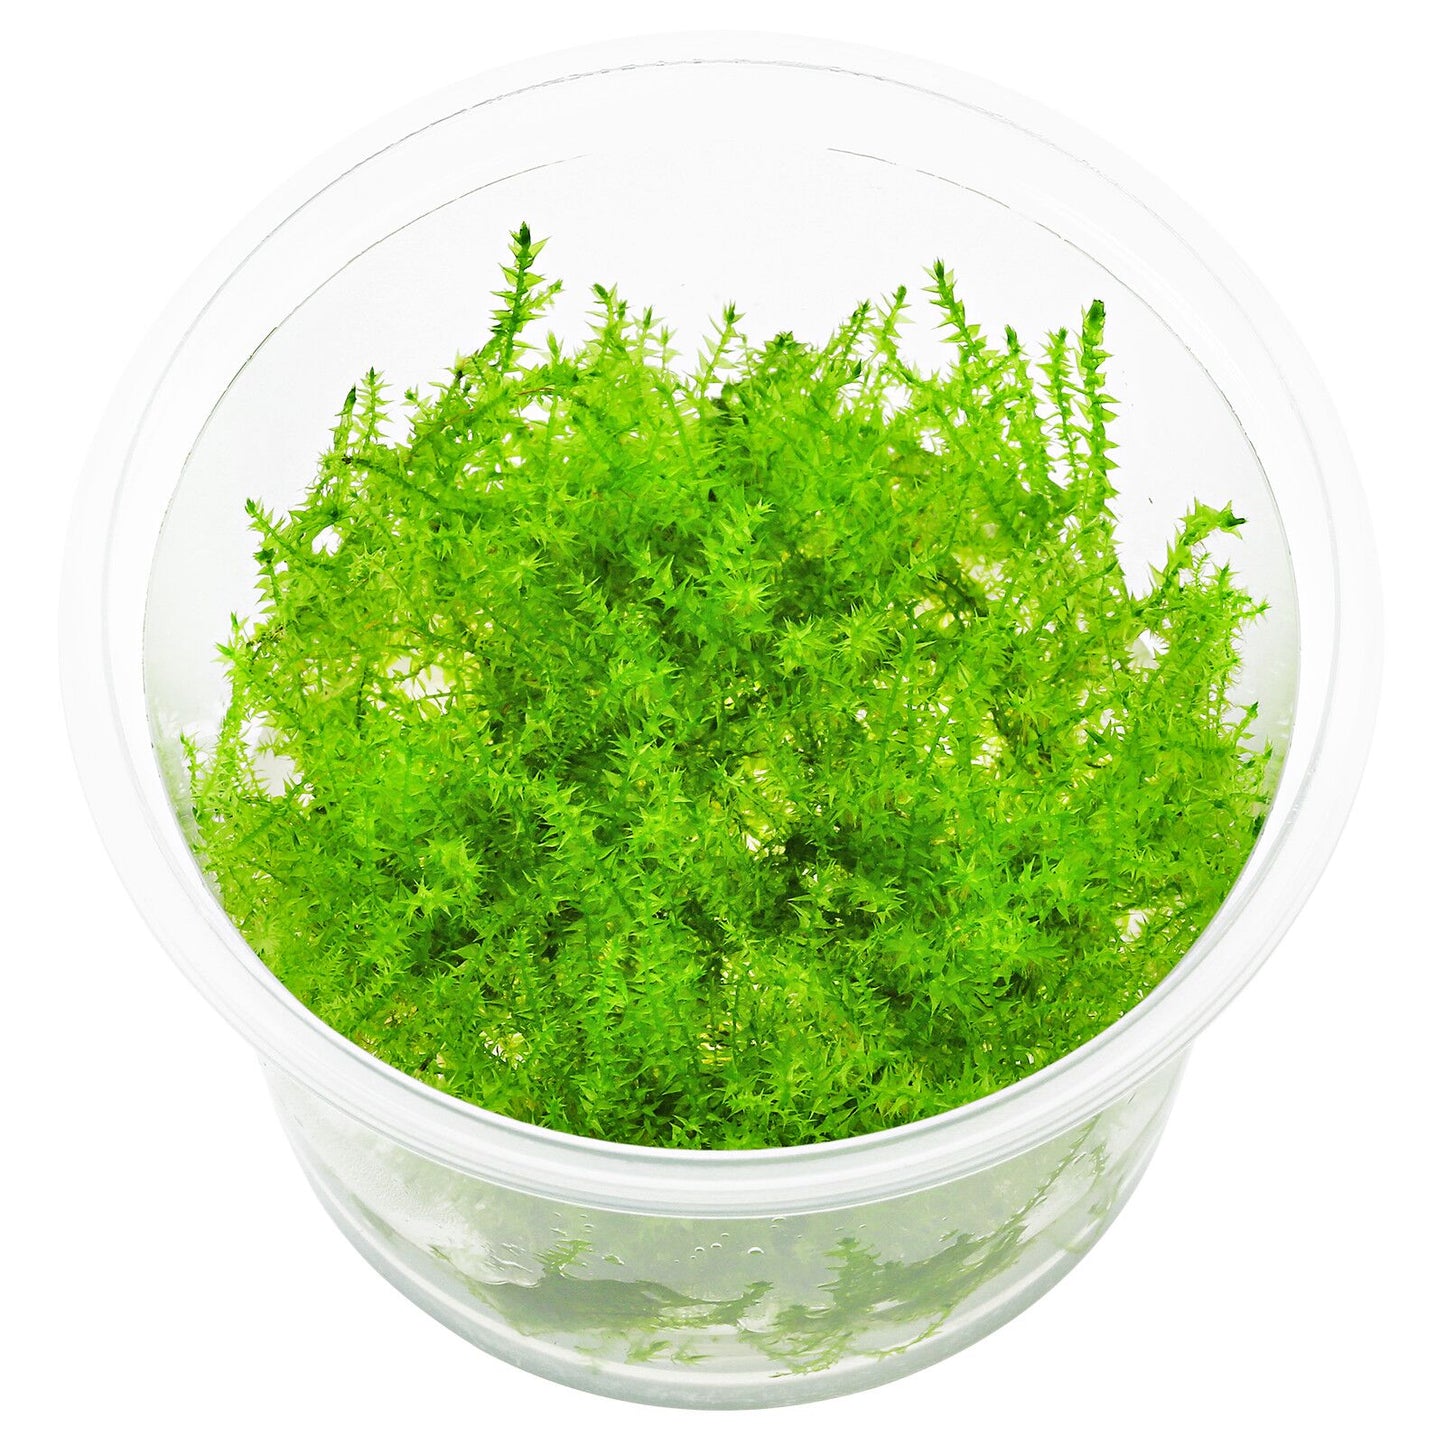 Leptodictyum riparium 'Streamside' moss - Small Tub